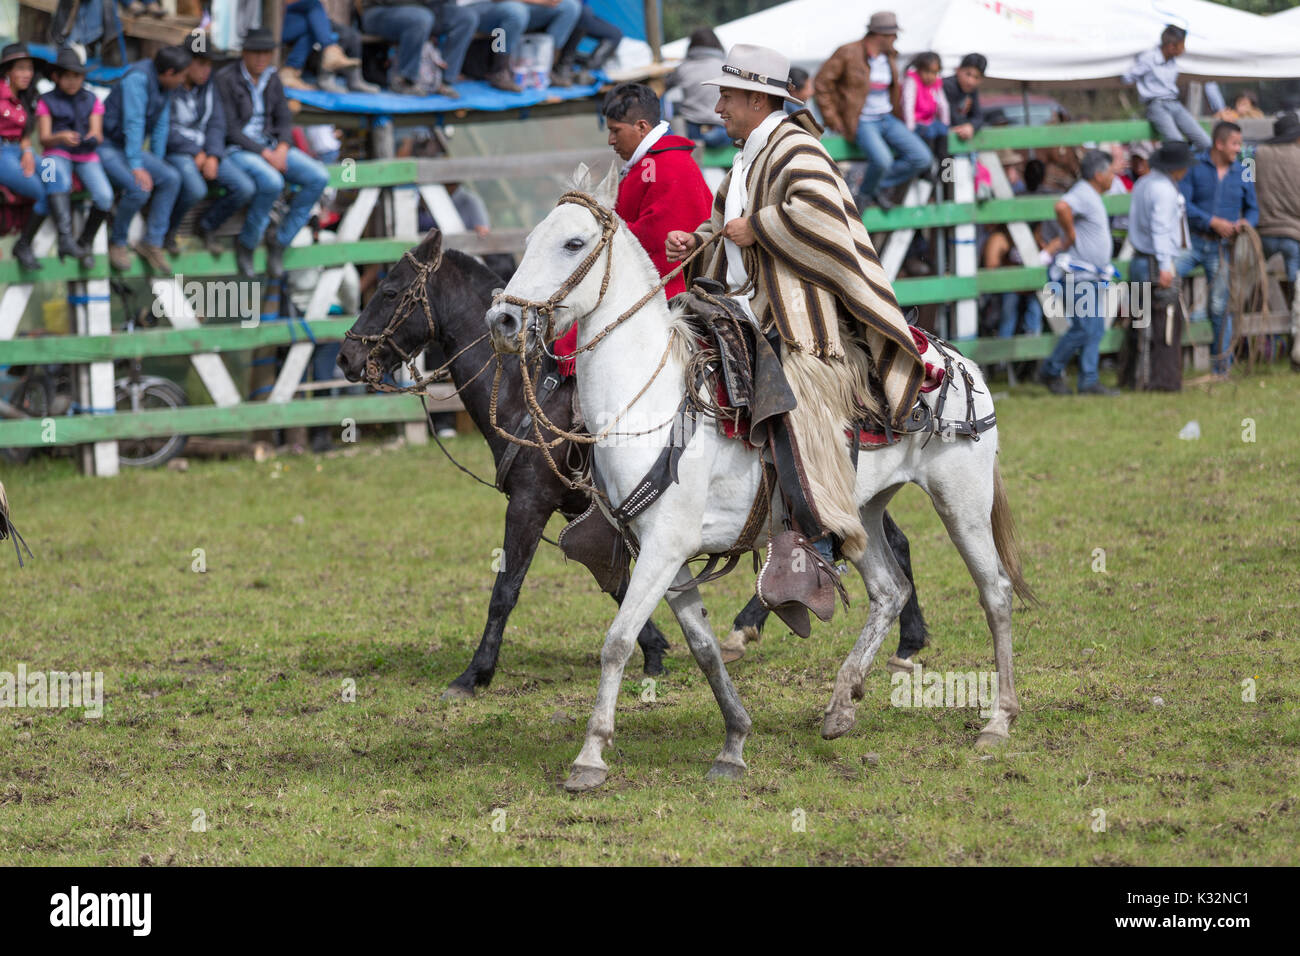 May 27, 2017 Sangolqui, Ecuador: quechua cowboys in poncho riding horse during a rural rodeo at high altitude Stock Photo